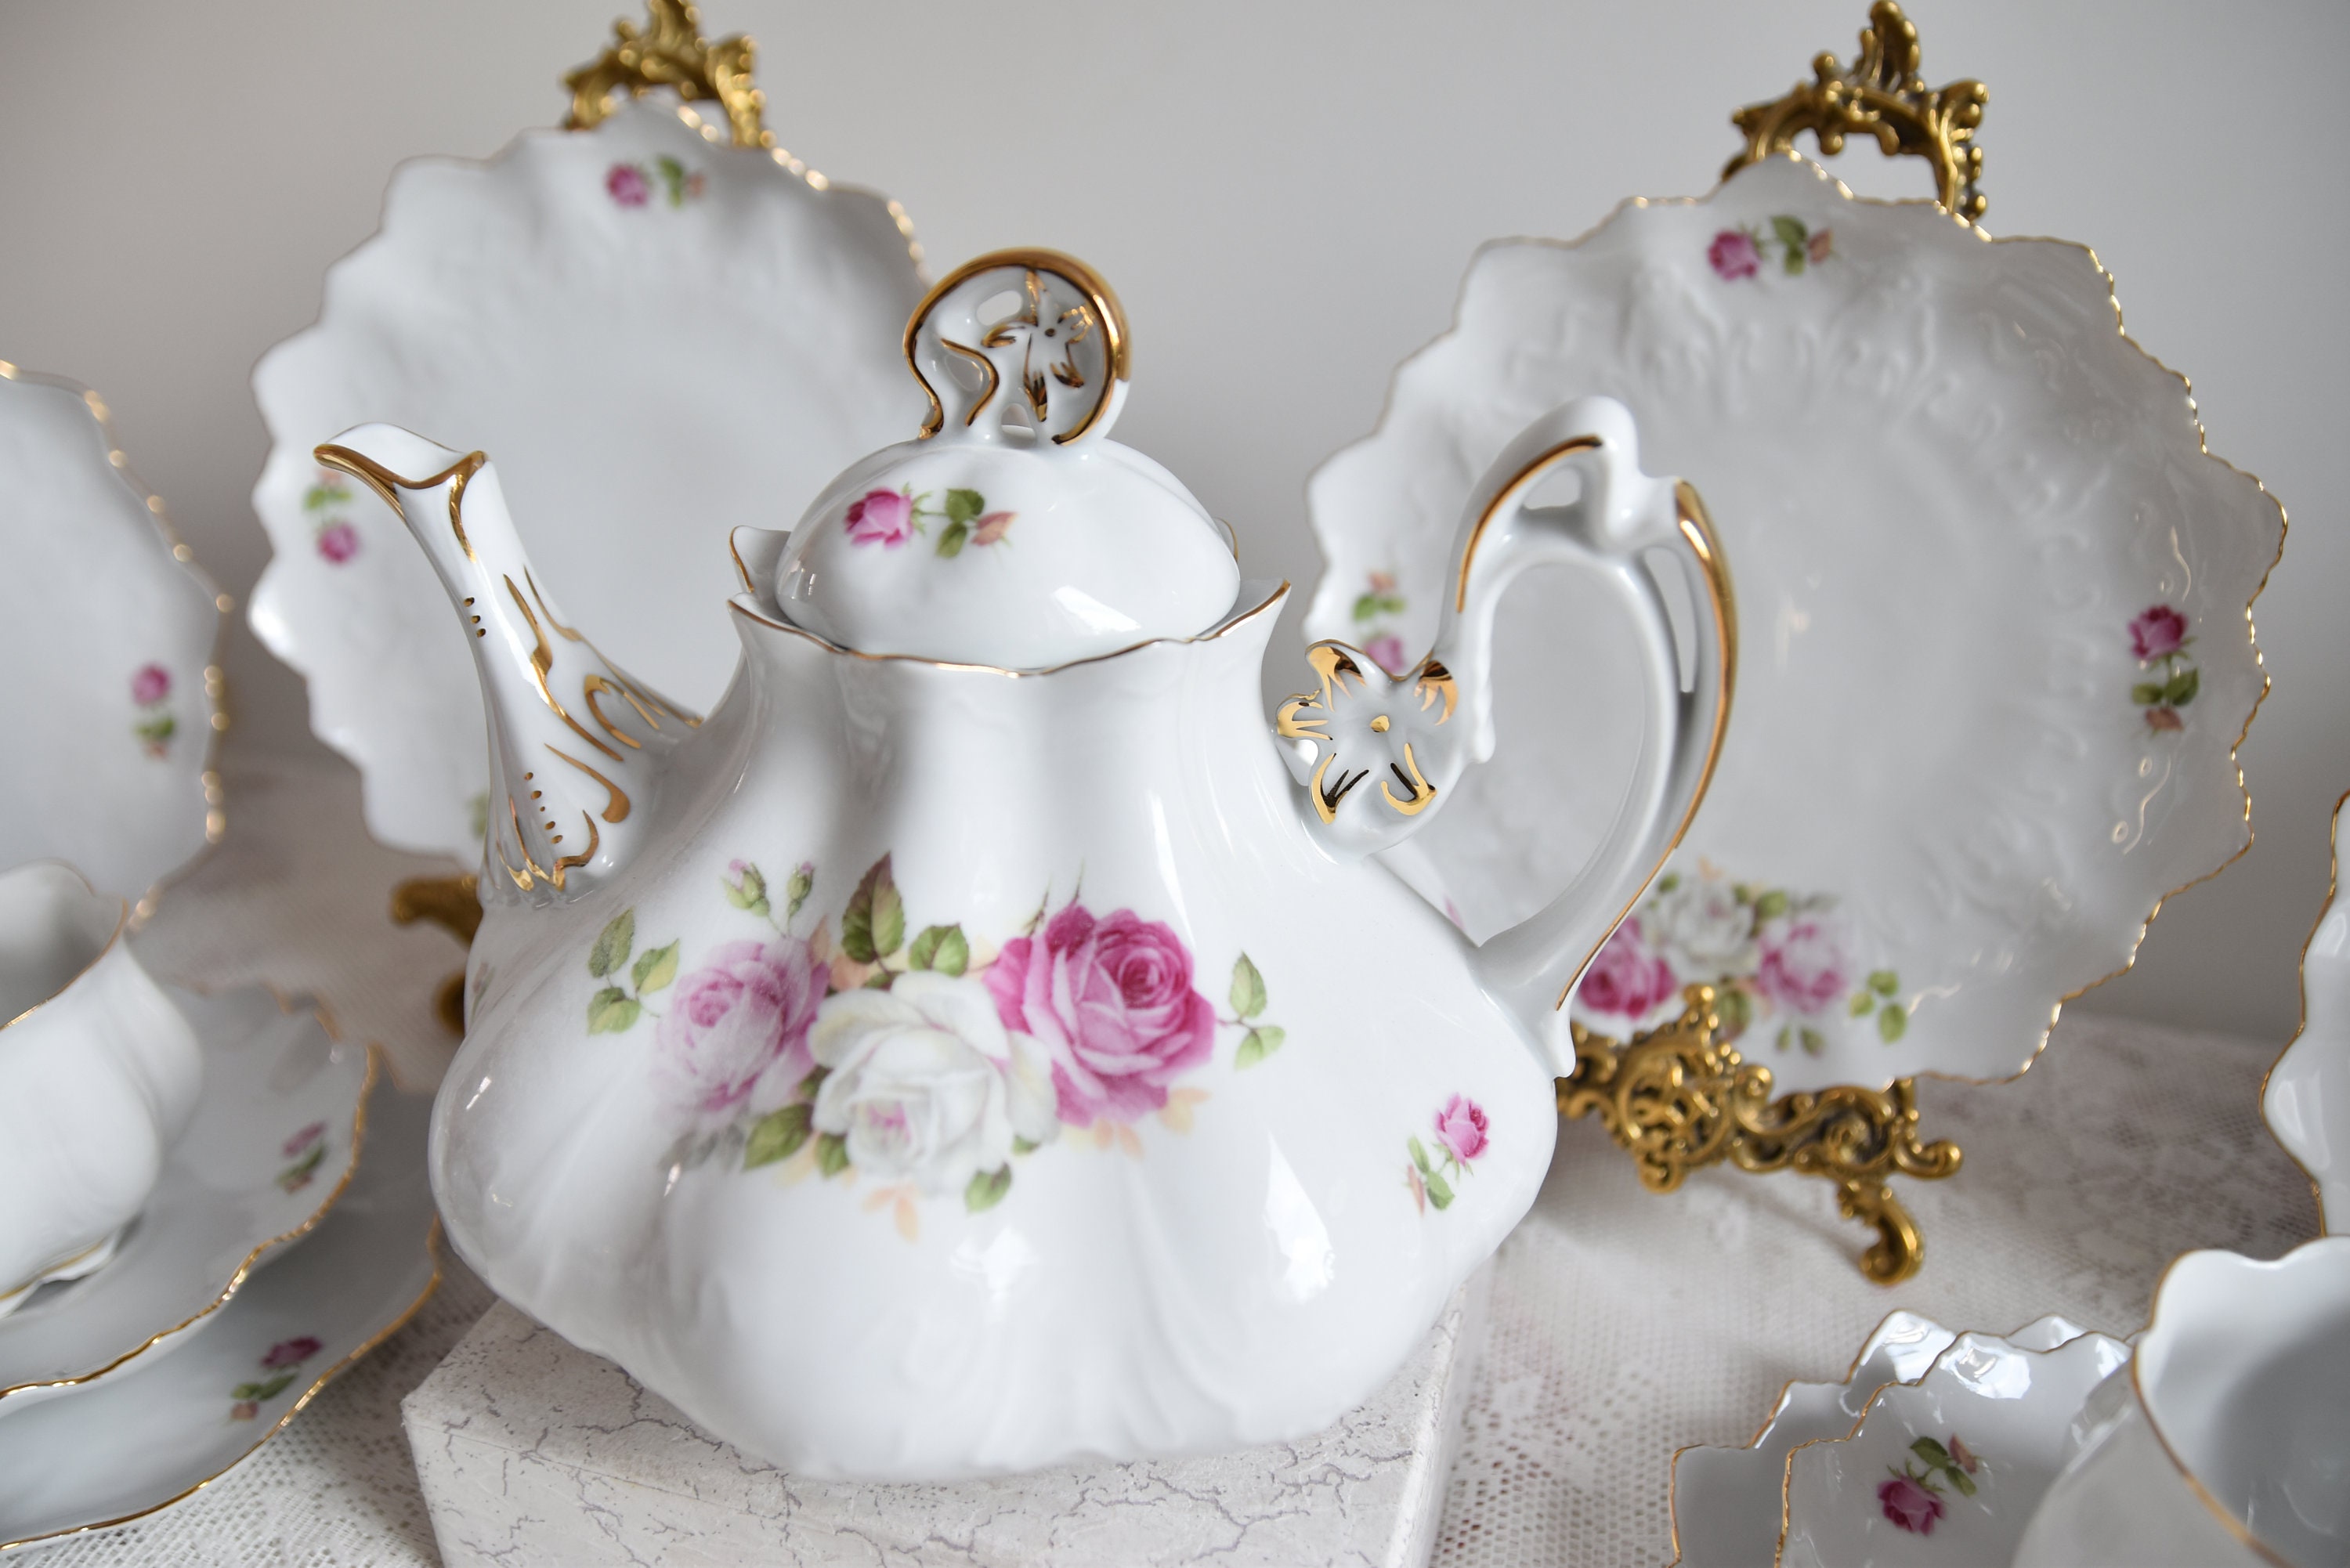 Antique Brass Tea Kettle Design by Artisans Rose at Pernia's Pop Up Shop  2023